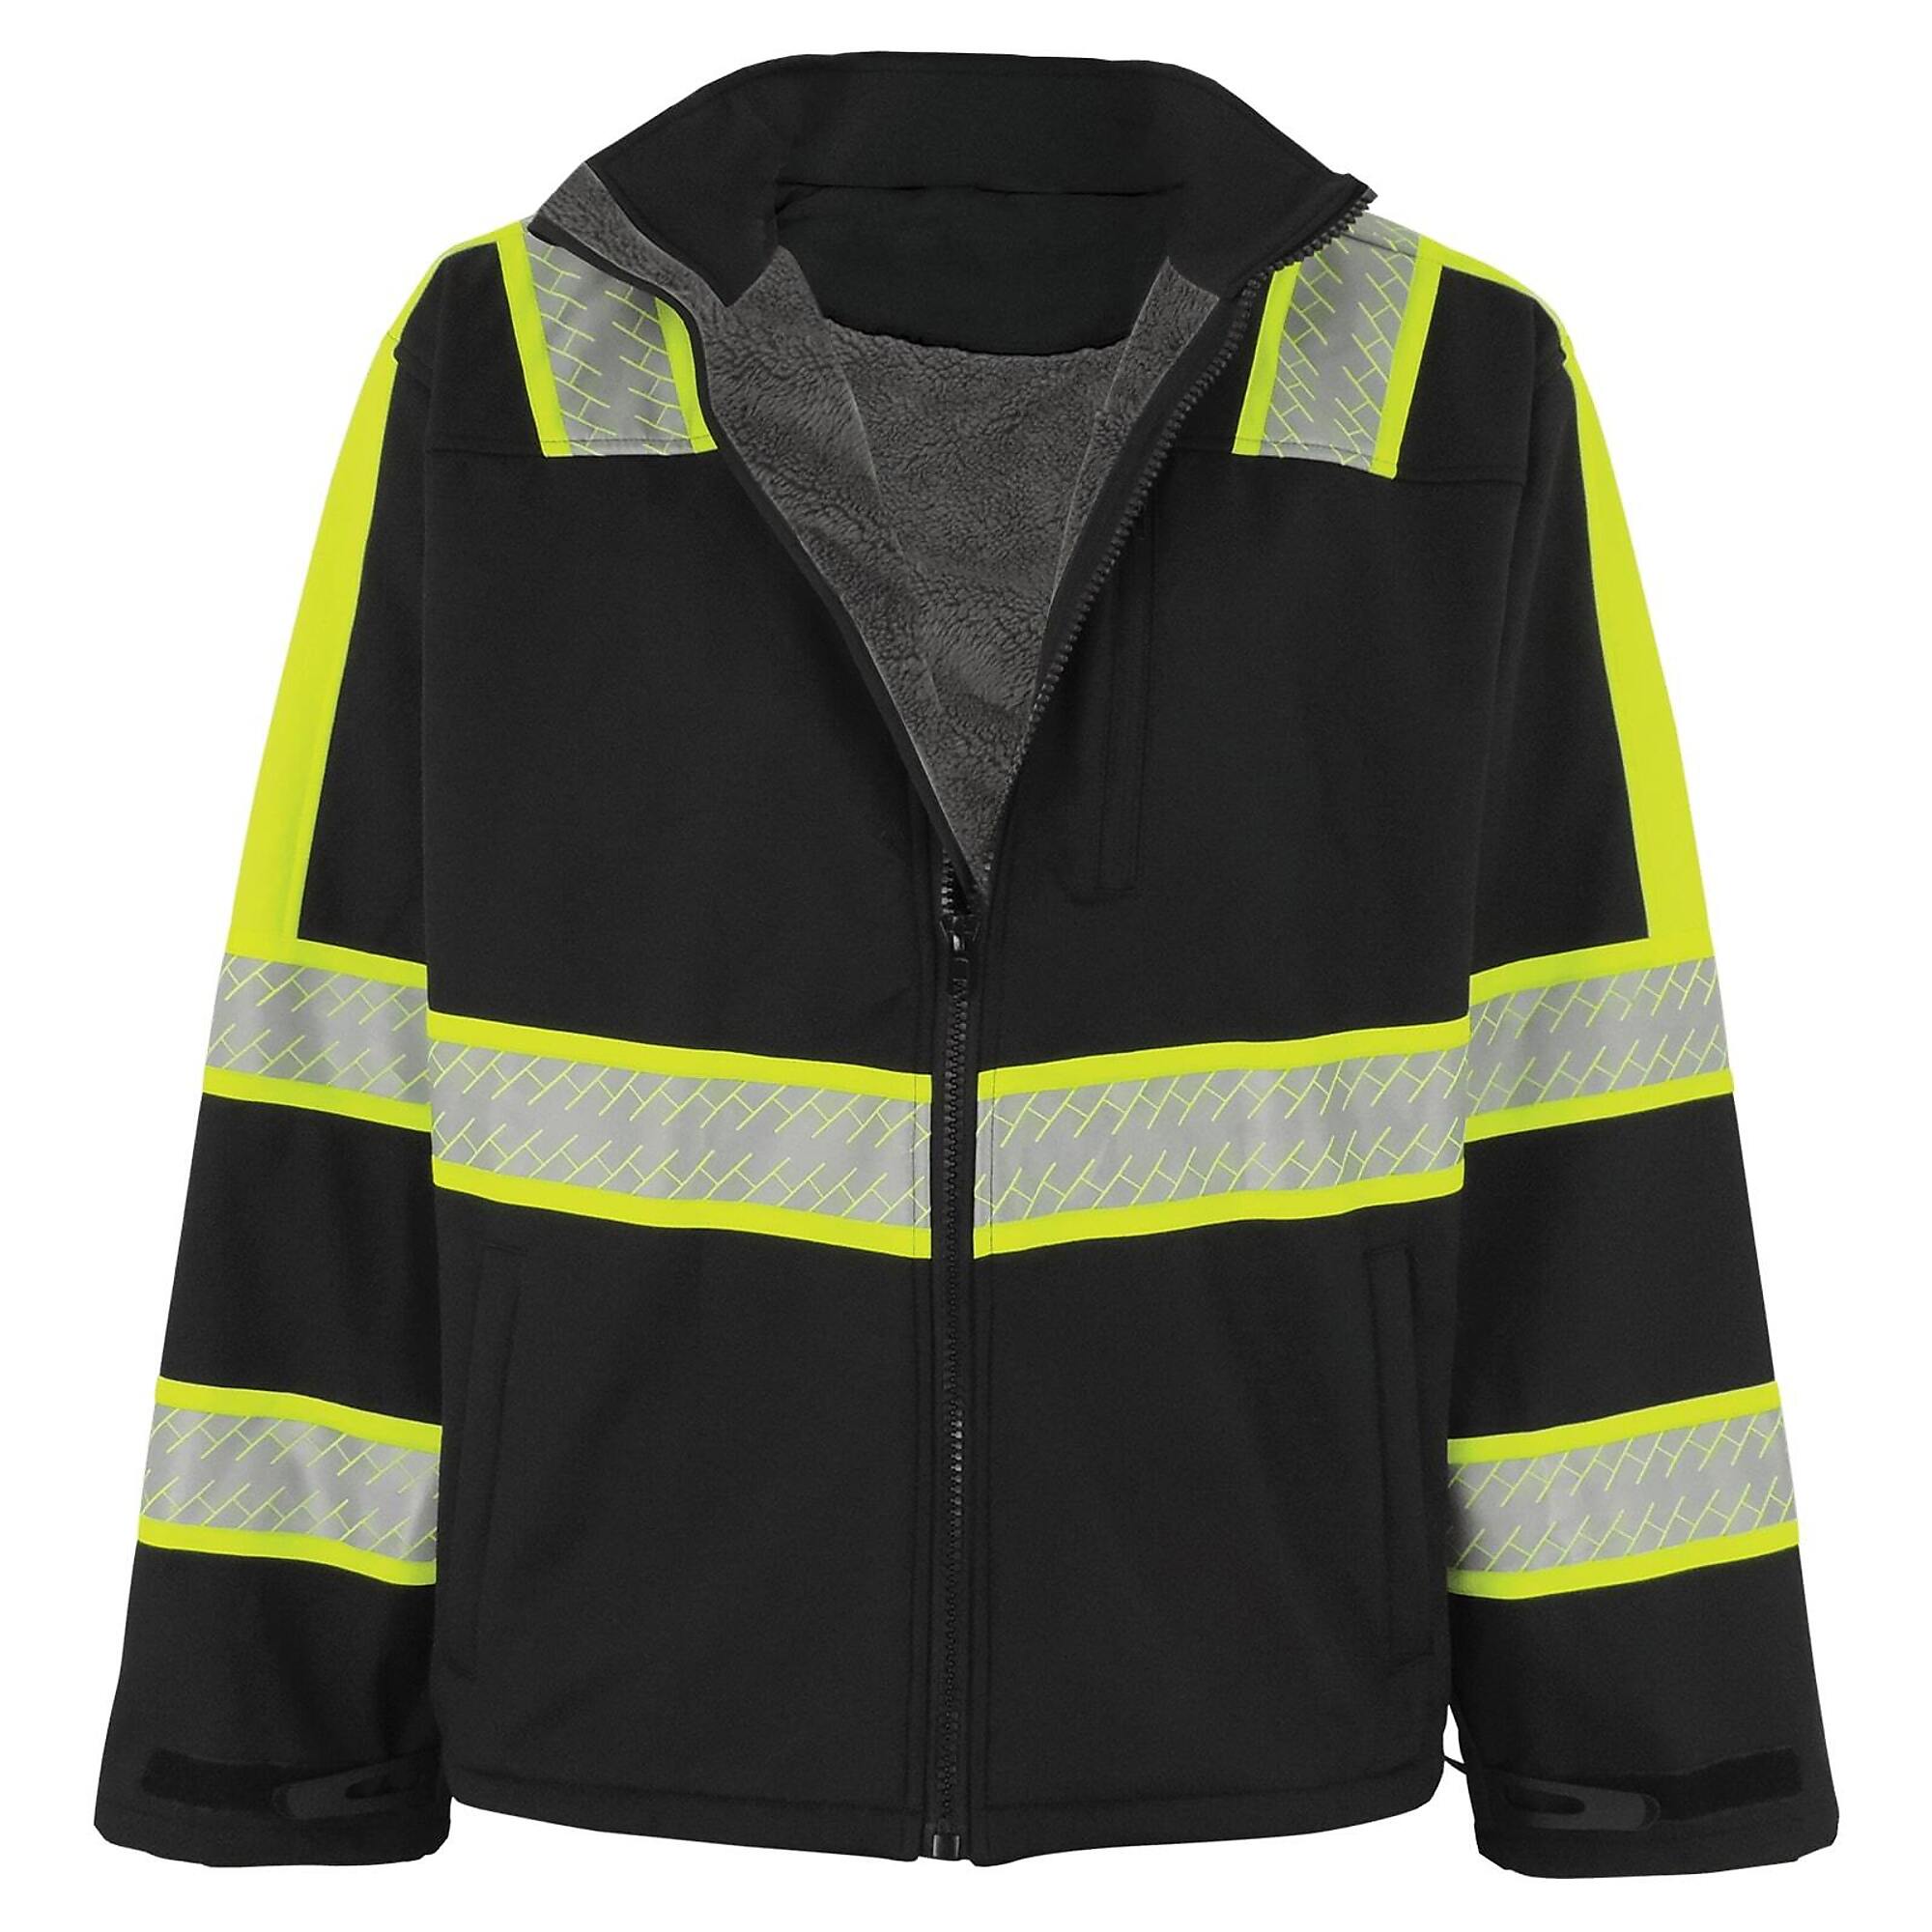 FrogWear, Prem Enhanced Visibility Black Sherpa-Lined Jacket, Size 4XL, Color Black with Silver Reflective, Model EV-SJ1-4XL